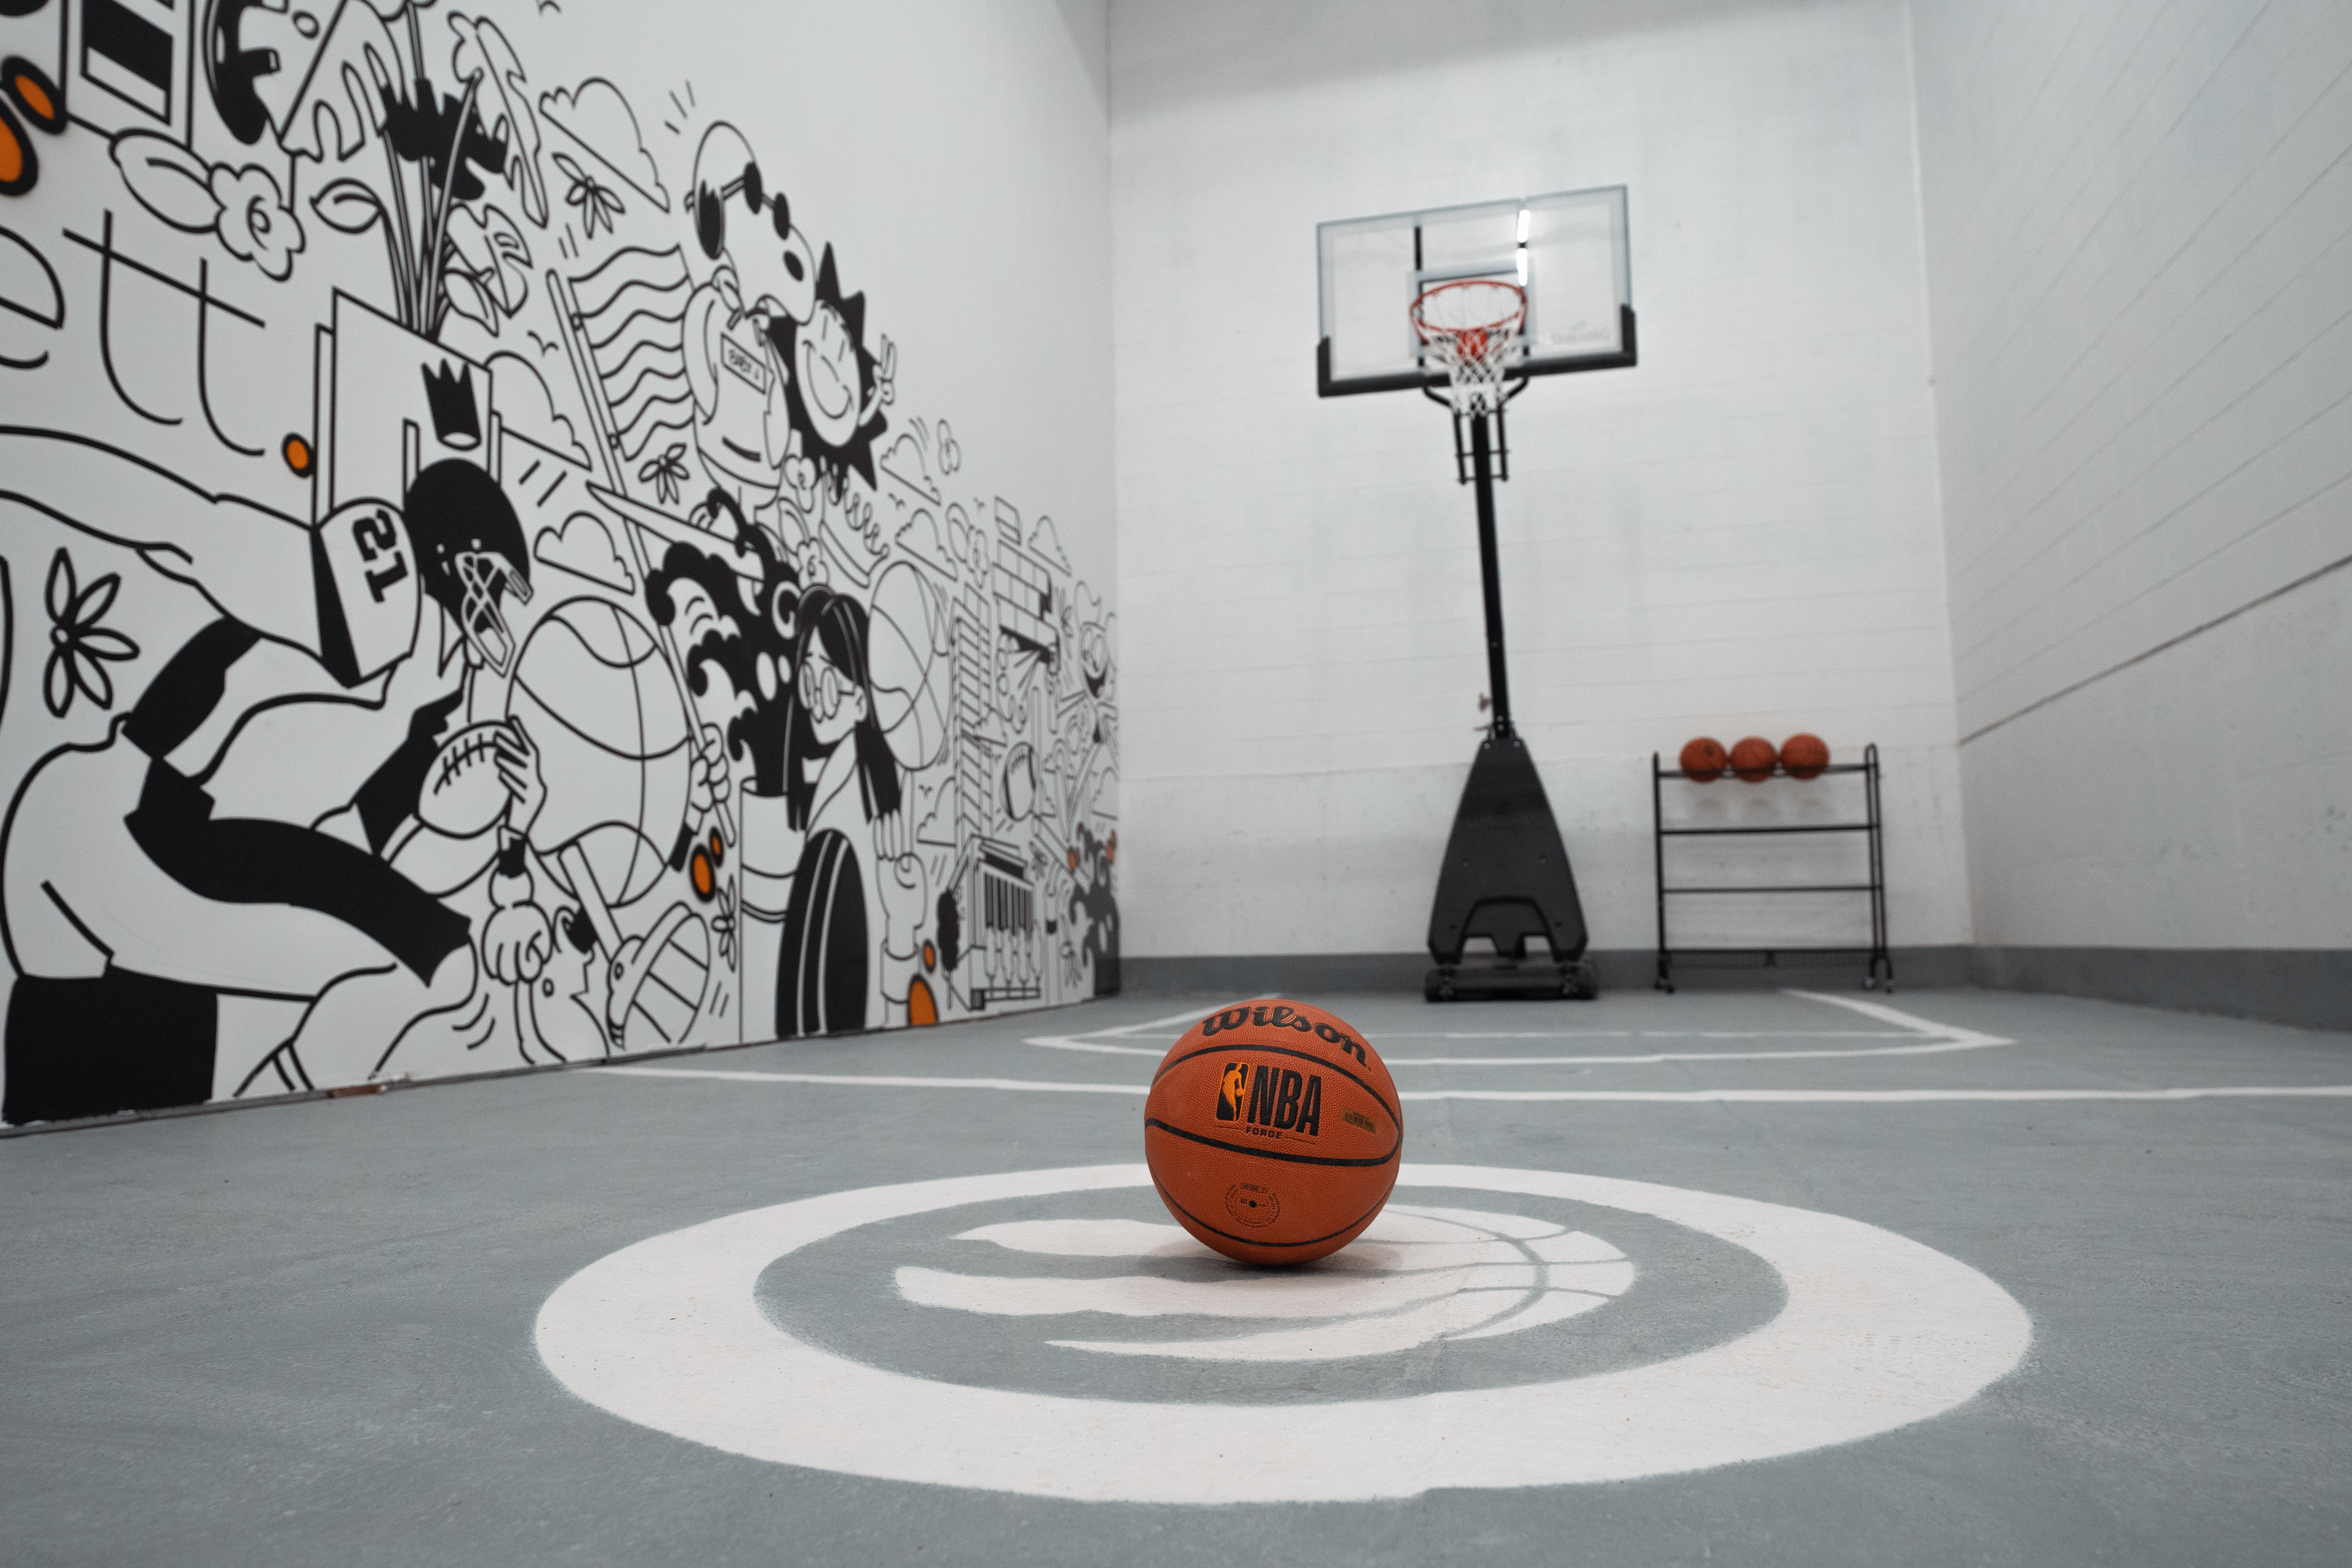 https://www.vmcdn.ca/f/files/ottawamatters/spotlight-images/district-realty/basketballcourt_edit_3.jpg